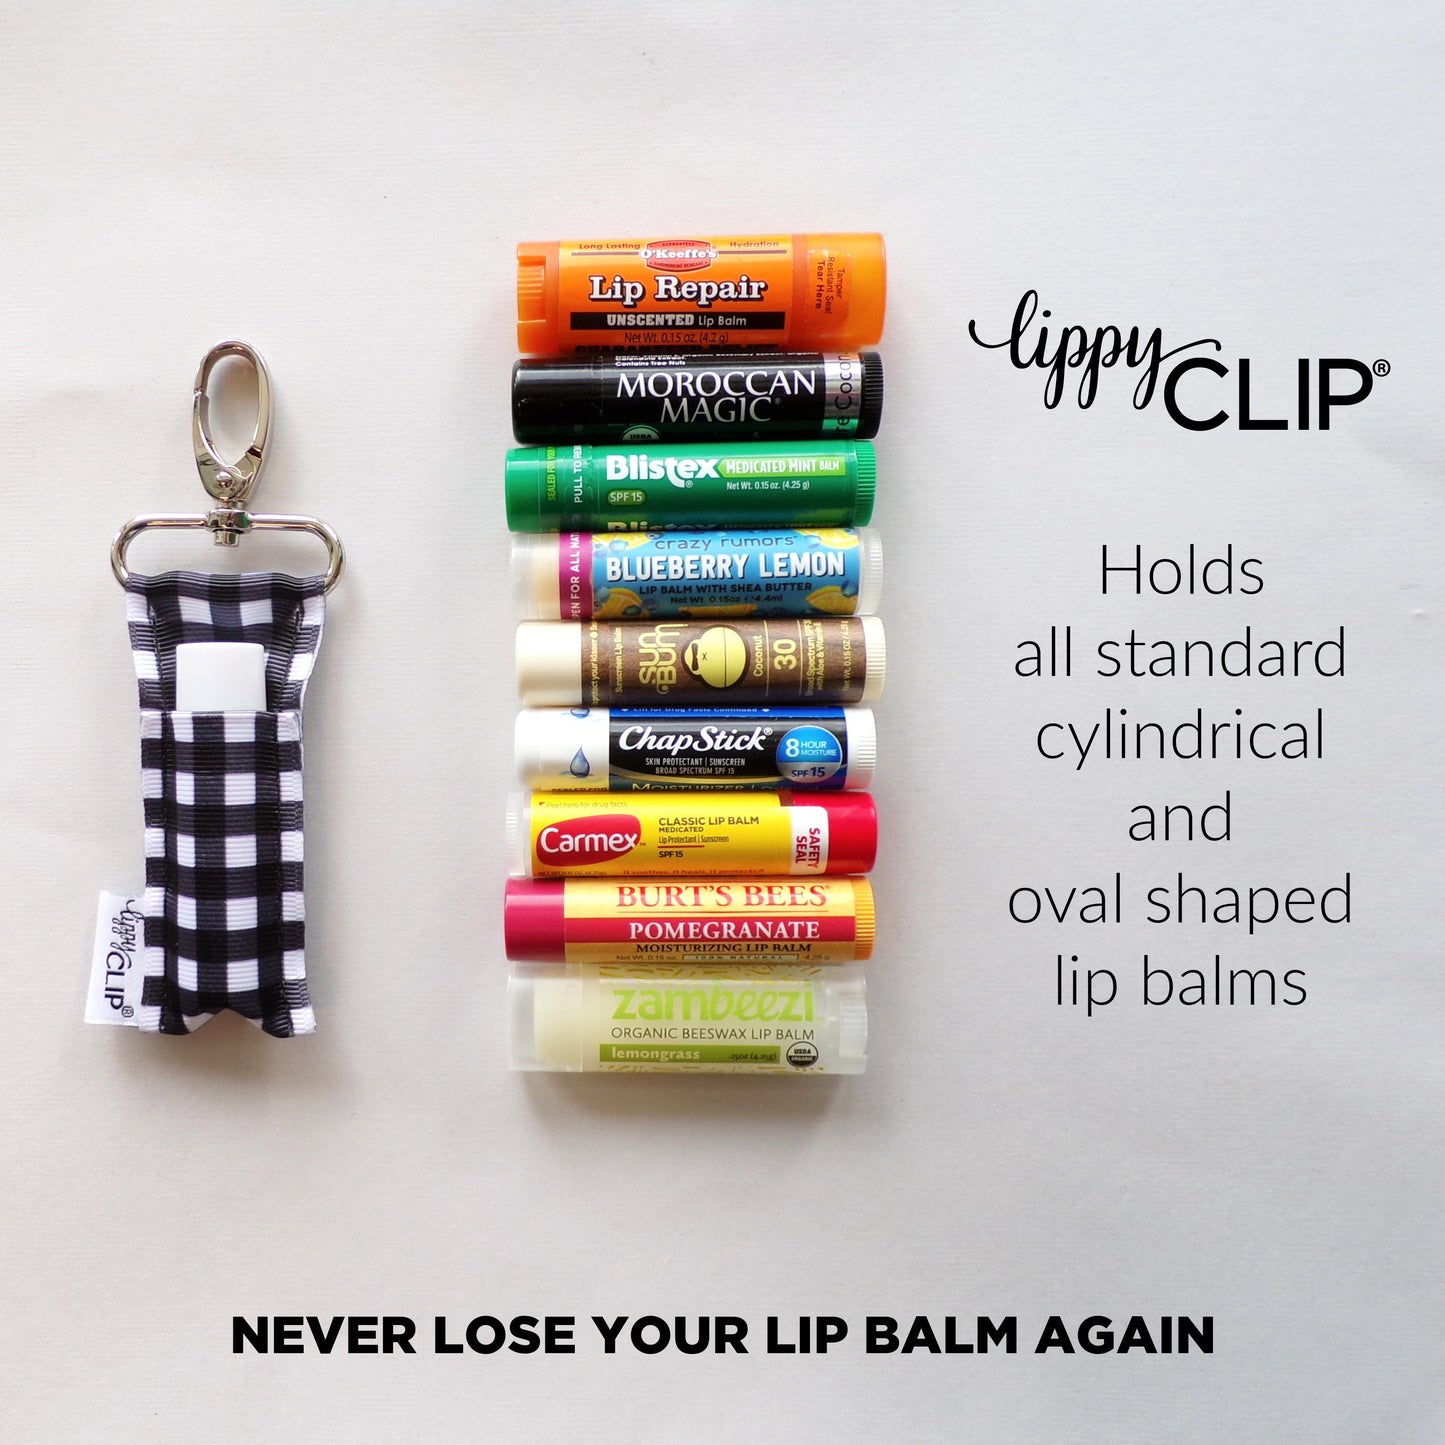 Pugs LippyClip® Lip Balm Holder